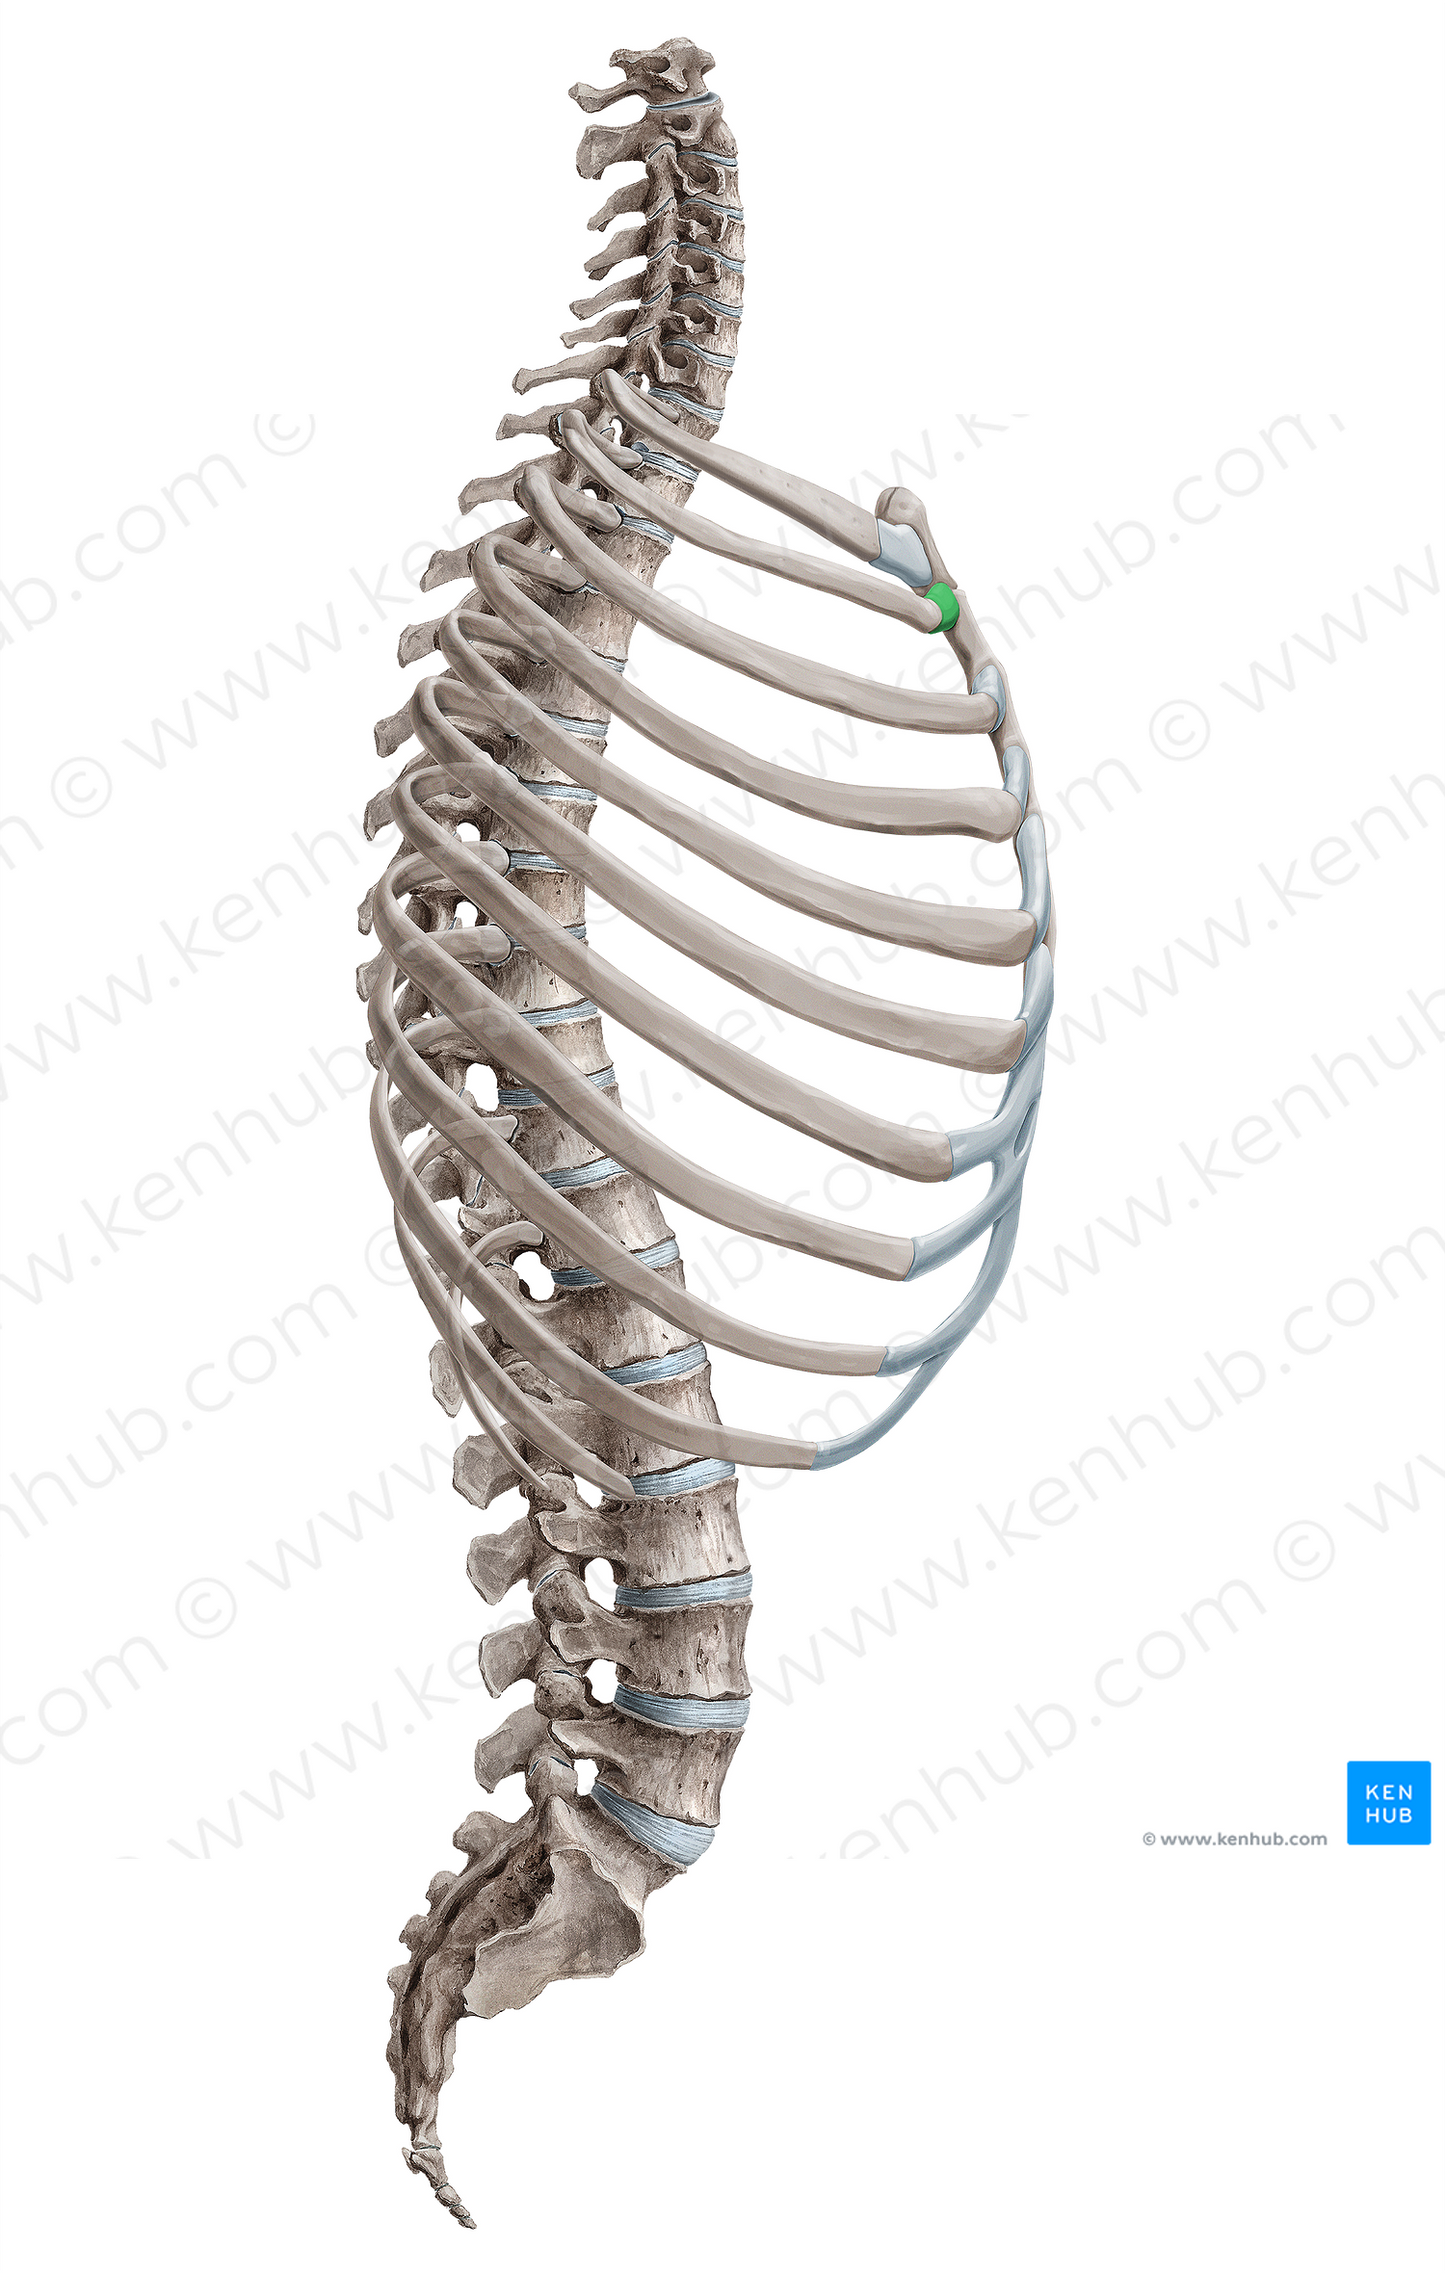 Costal cartilage of 2nd rib (#18155)